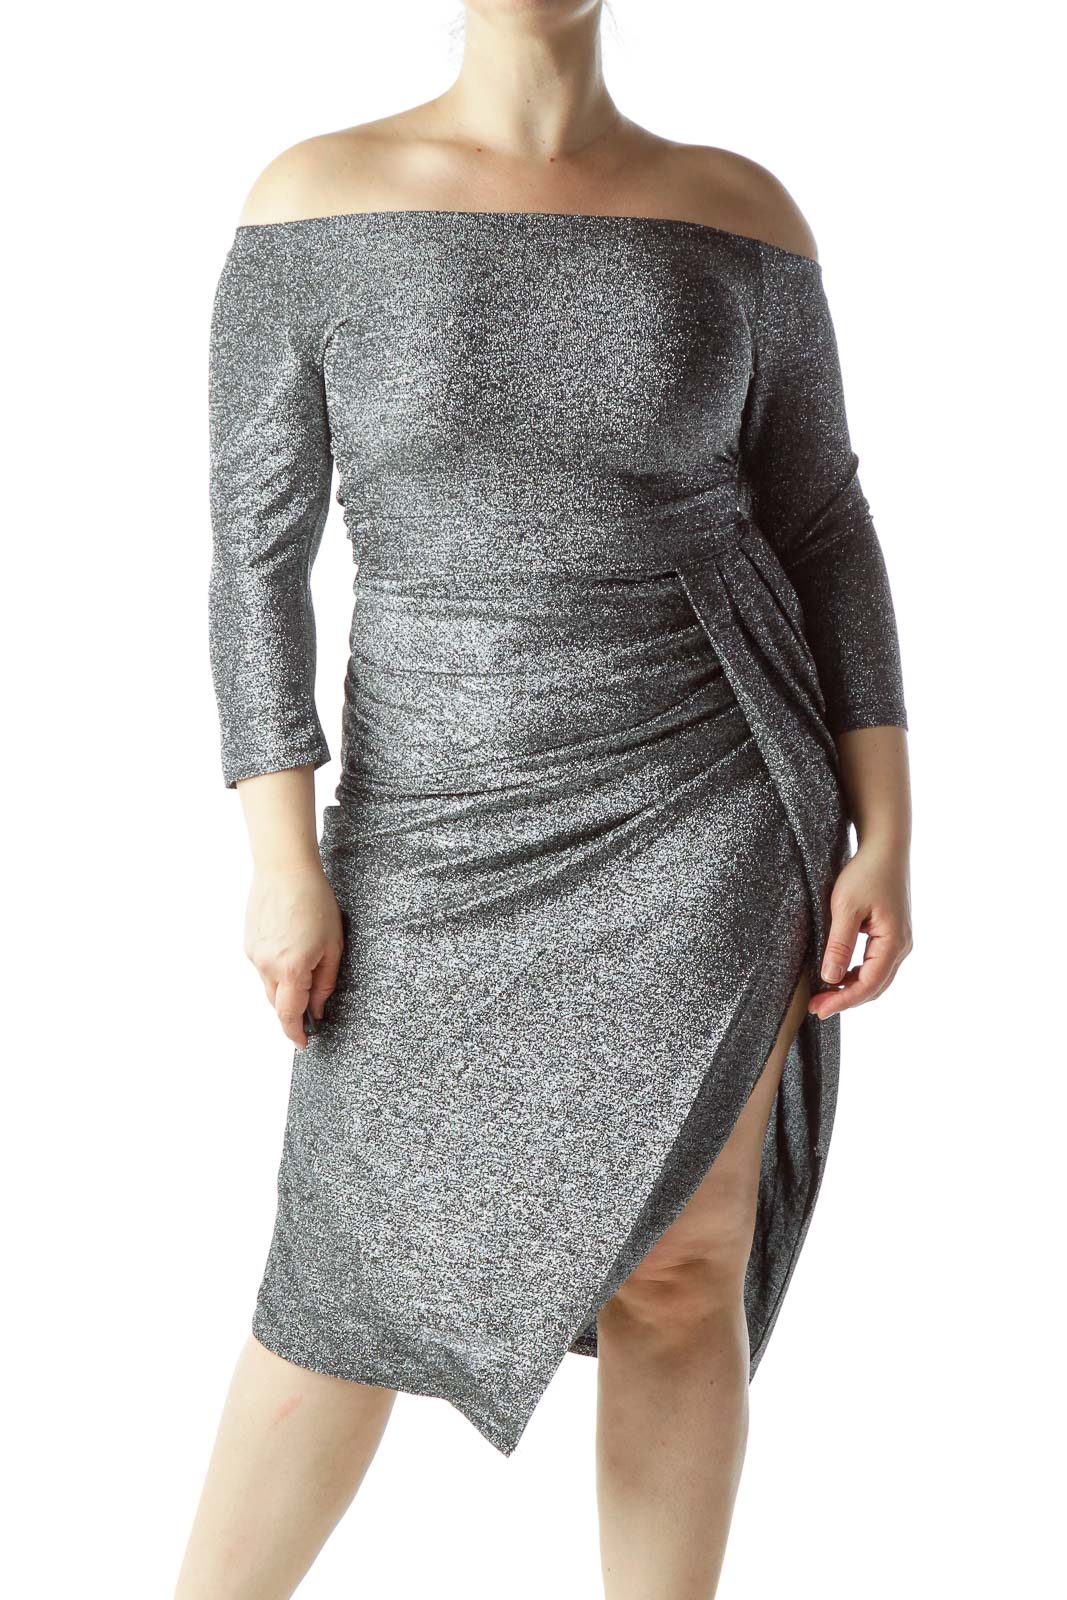 Silver Sparkled Asymmetric Dress Front